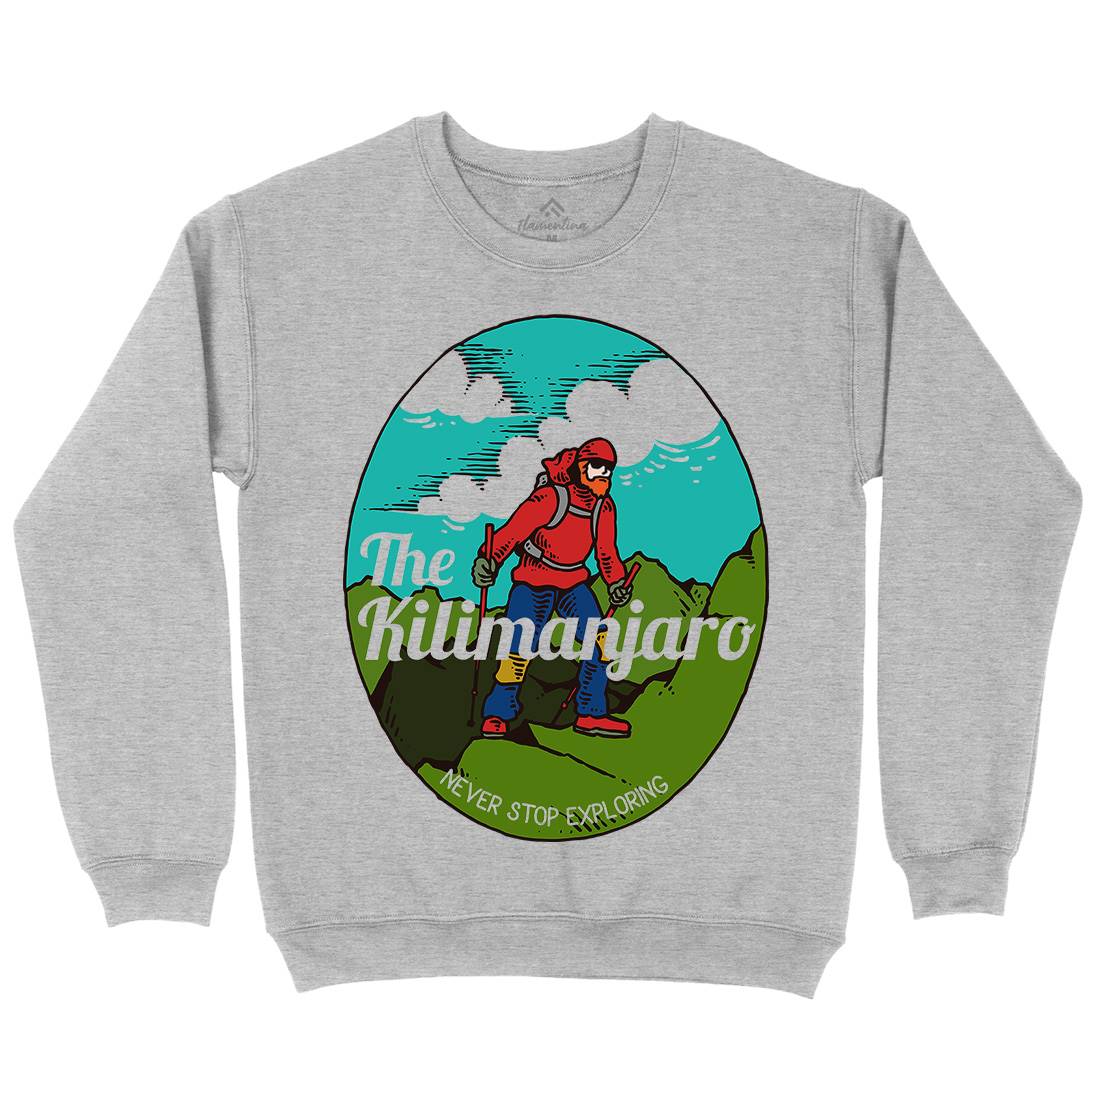 Kilimanjaro Kids Crew Neck Sweatshirt Nature C739